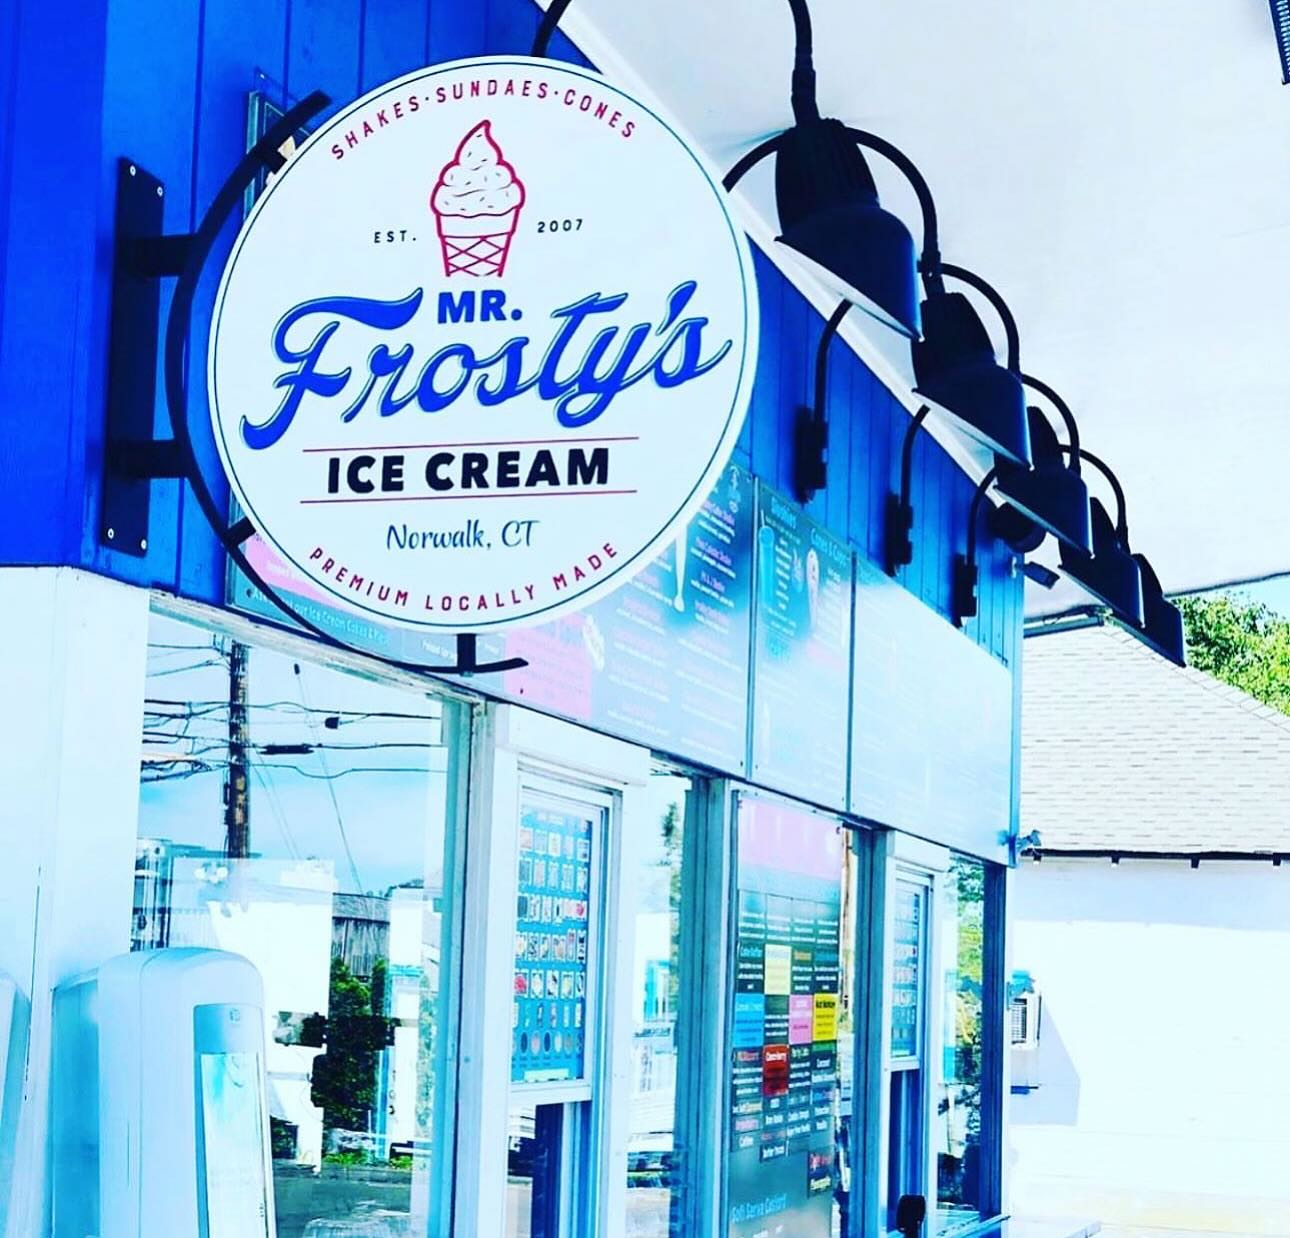 Mr. Frosty's Ice Cream Shop